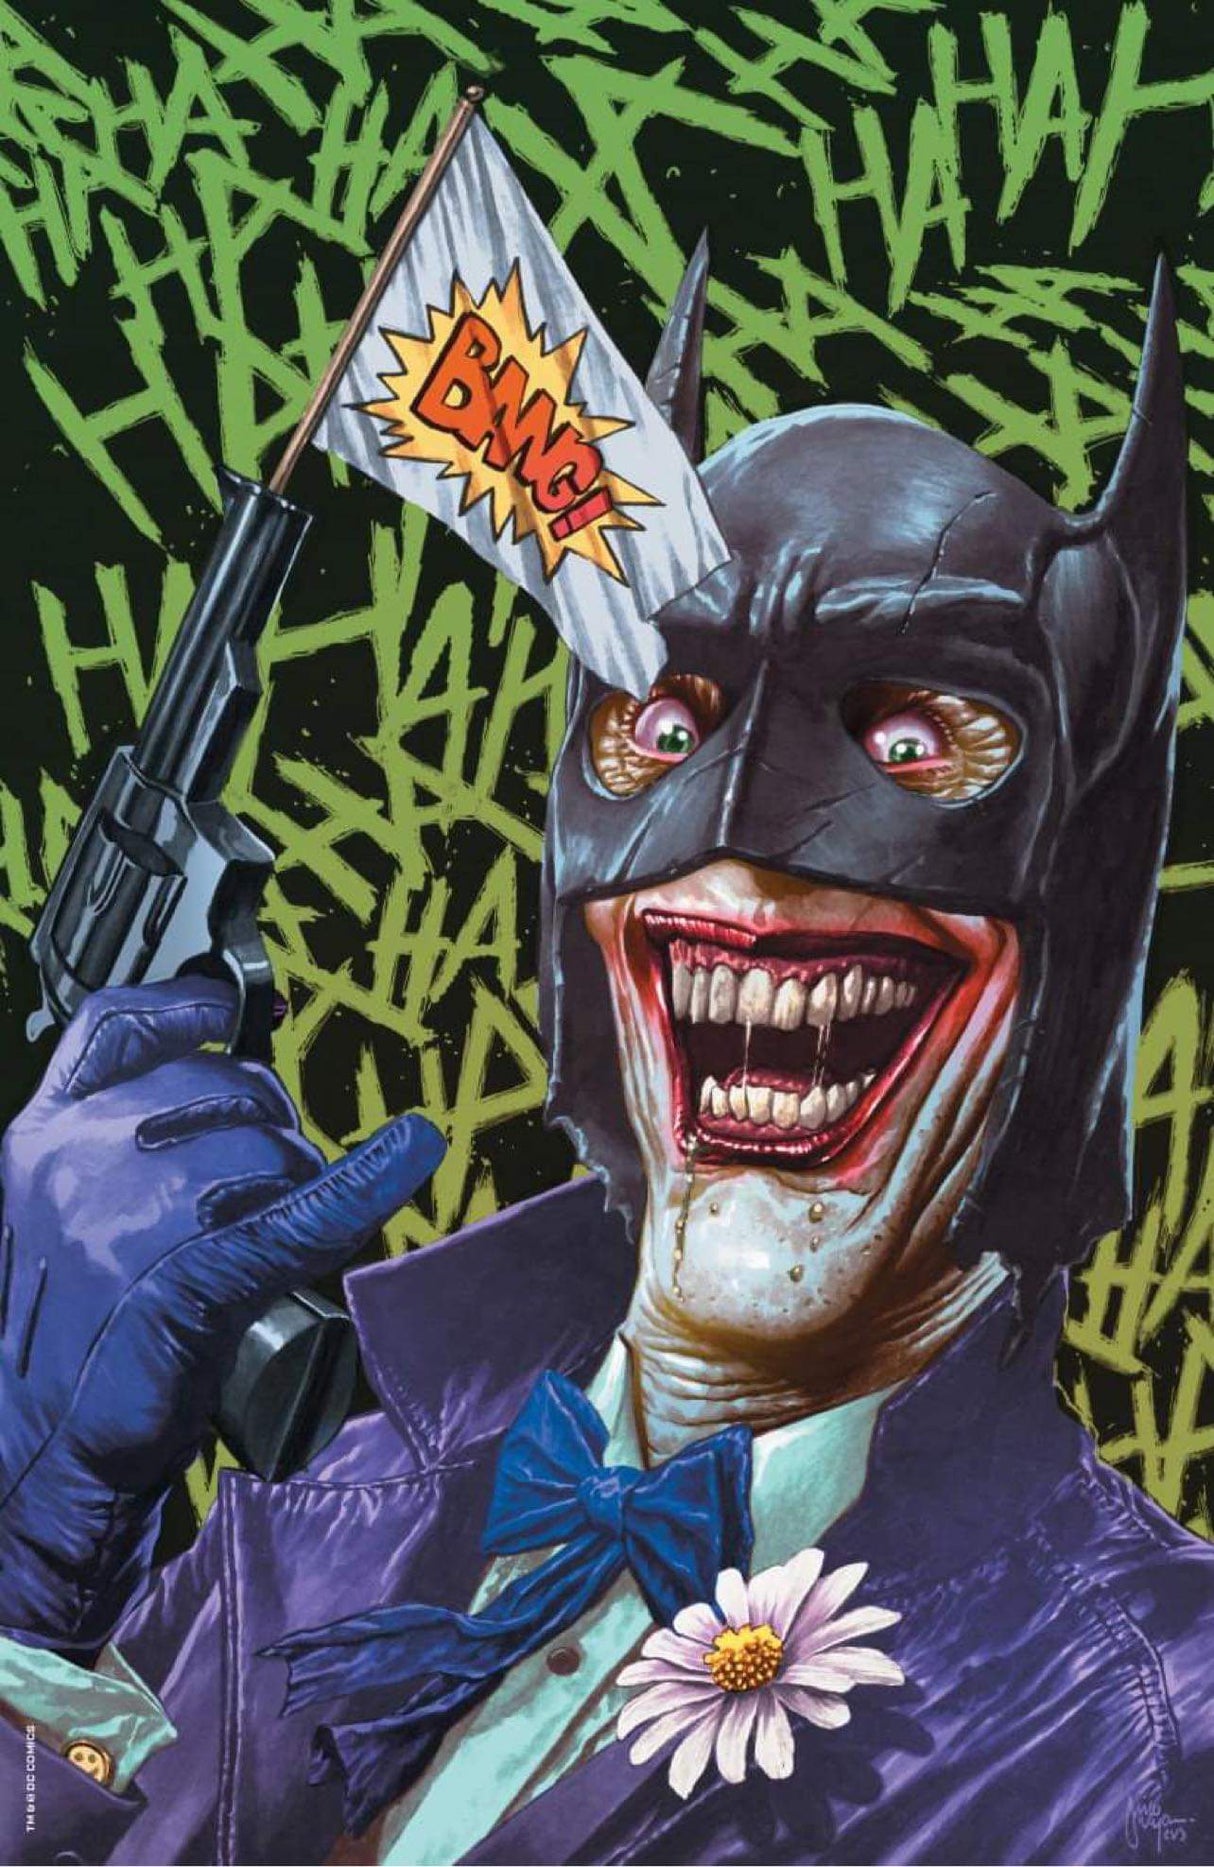 BATMAN & THE JOKER THE DEADLY DUO #1 - MICO SUYAN VIRGIN LTD 1000 - 11/1/22